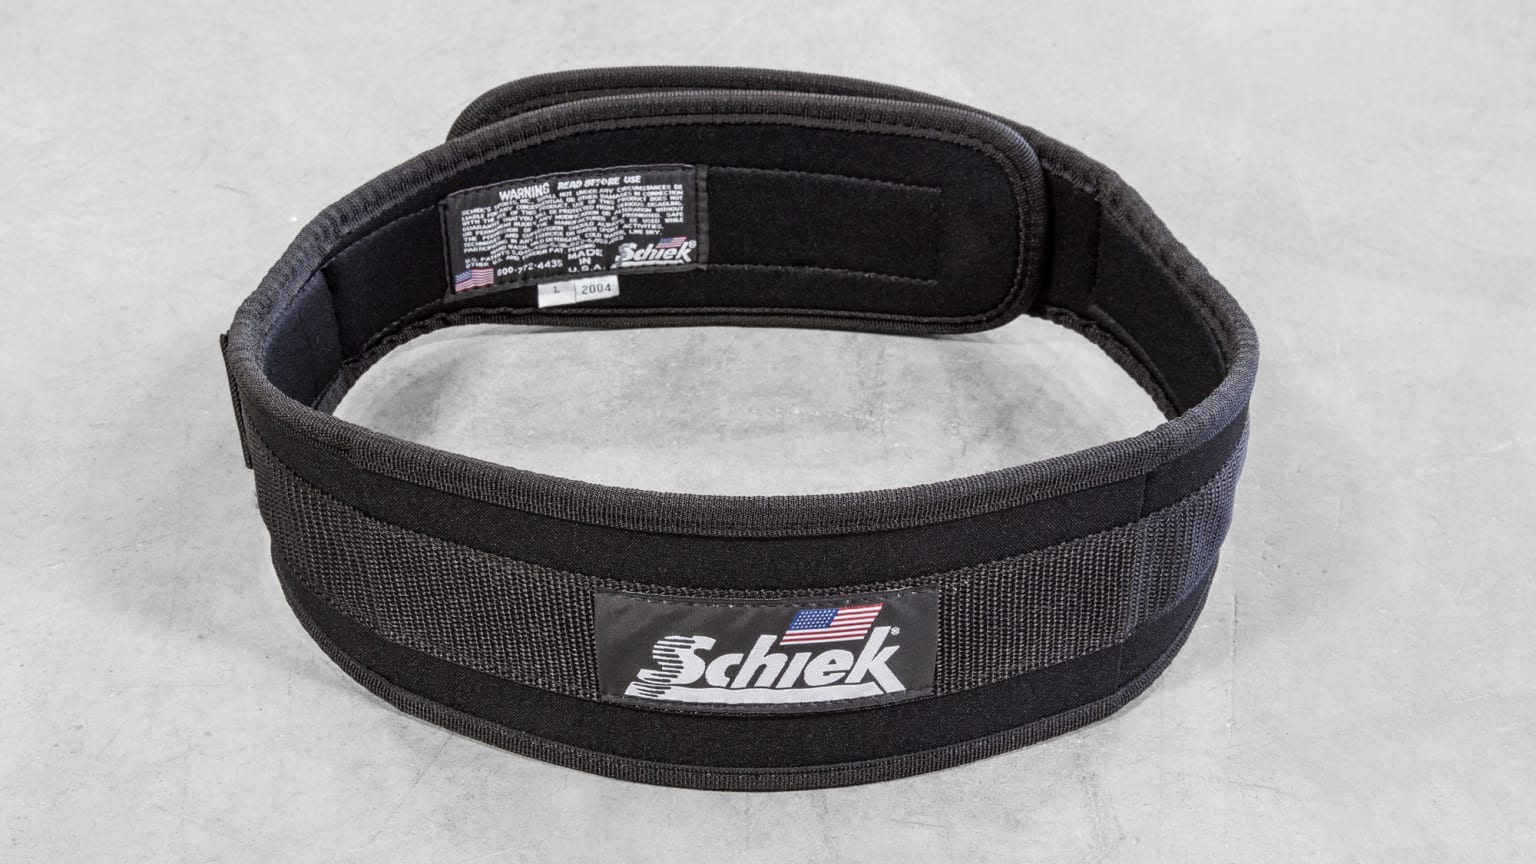 Black Schiek Sports Model 2004 Nylon 4 3/4" Weight Lifting Belt 